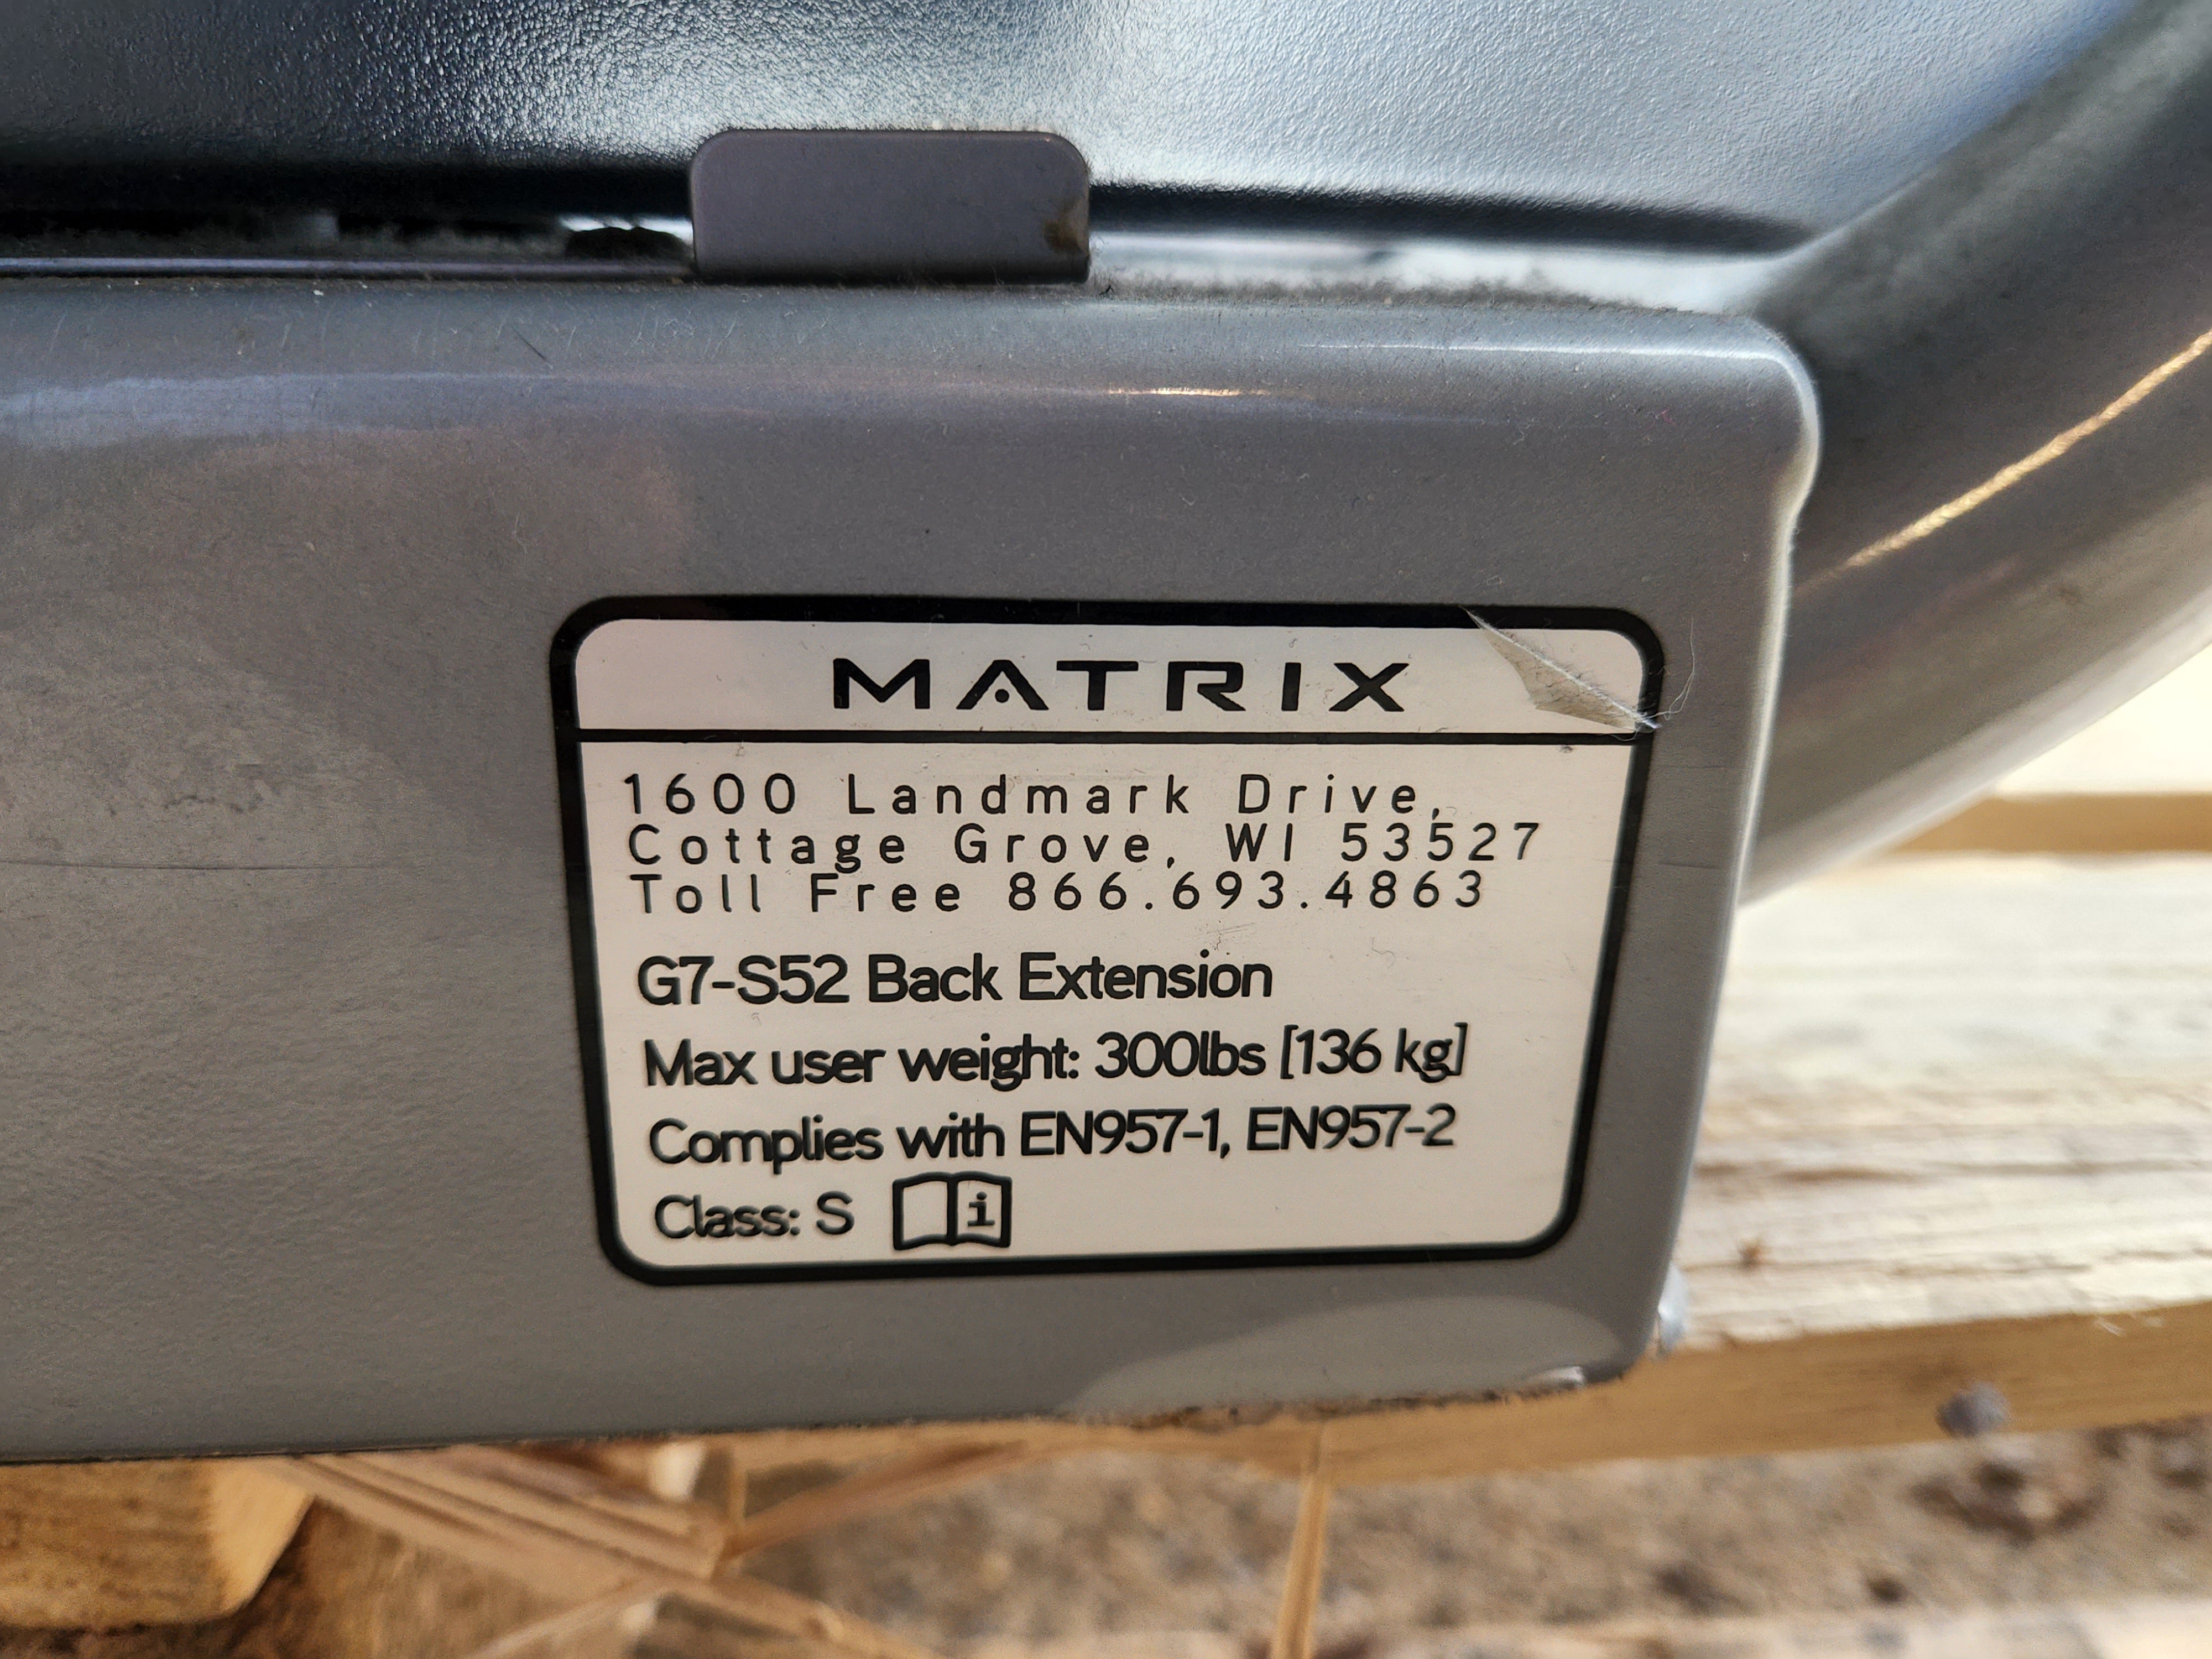 Matrix G7-S52 Back Extension Machine